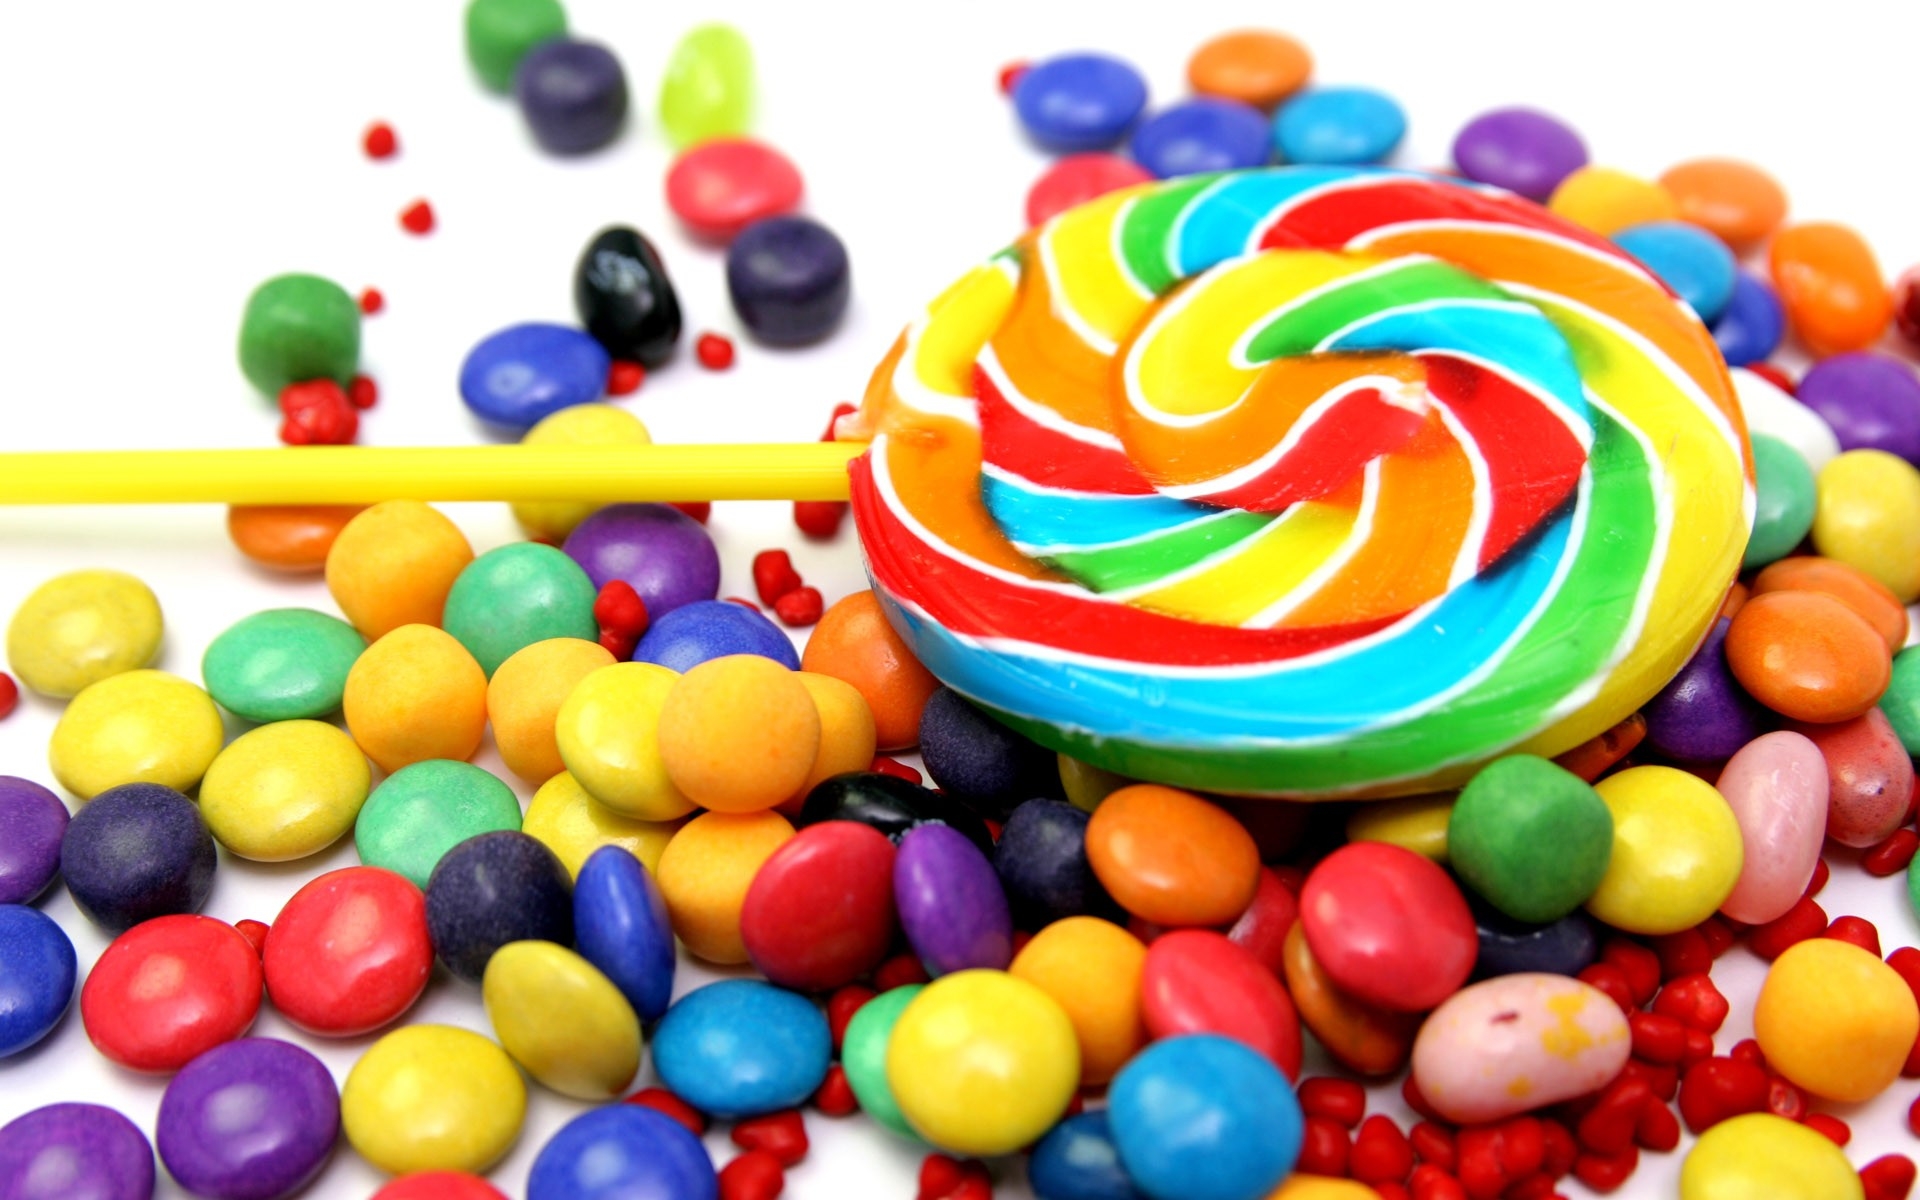 Desktop Wallpaper Colorful Lollipop Candies Sweets 4k Hd Image  Picture Background 9b79ea